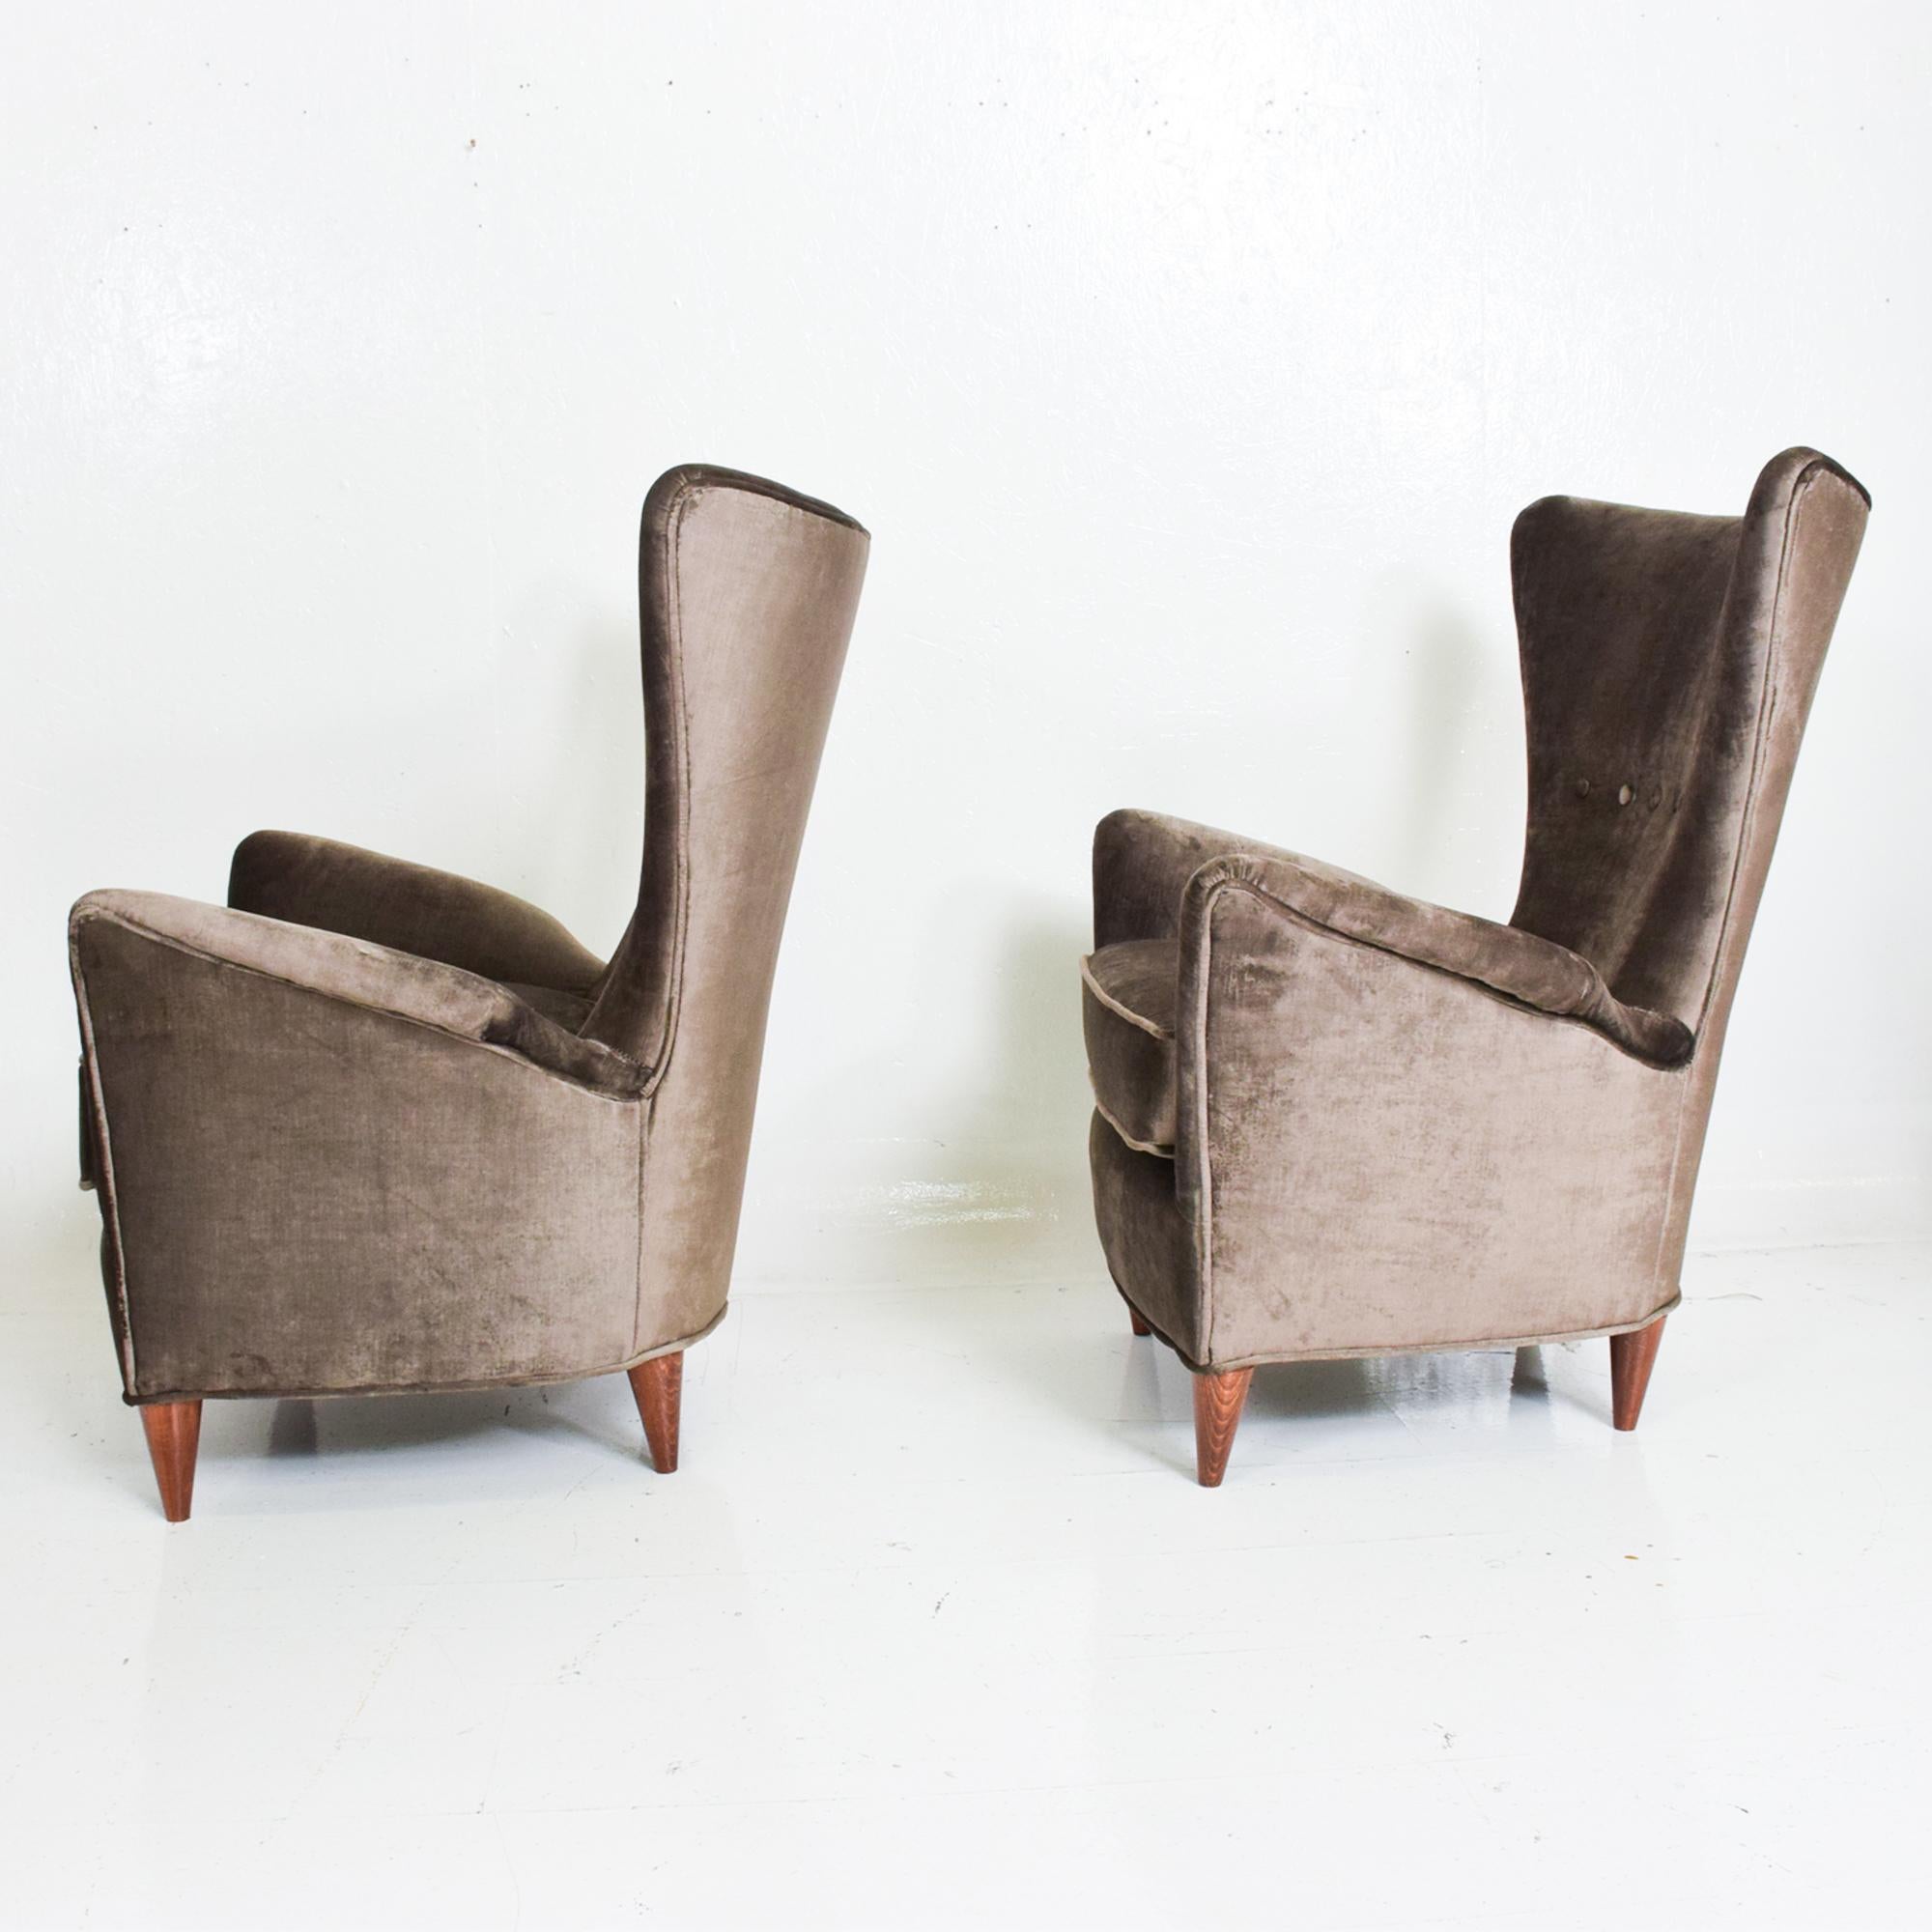 Mid-20th Century Gio Ponti Luxury Lounge Arm Chair Pair from Hotel Bristol Merano, Italy 1950s